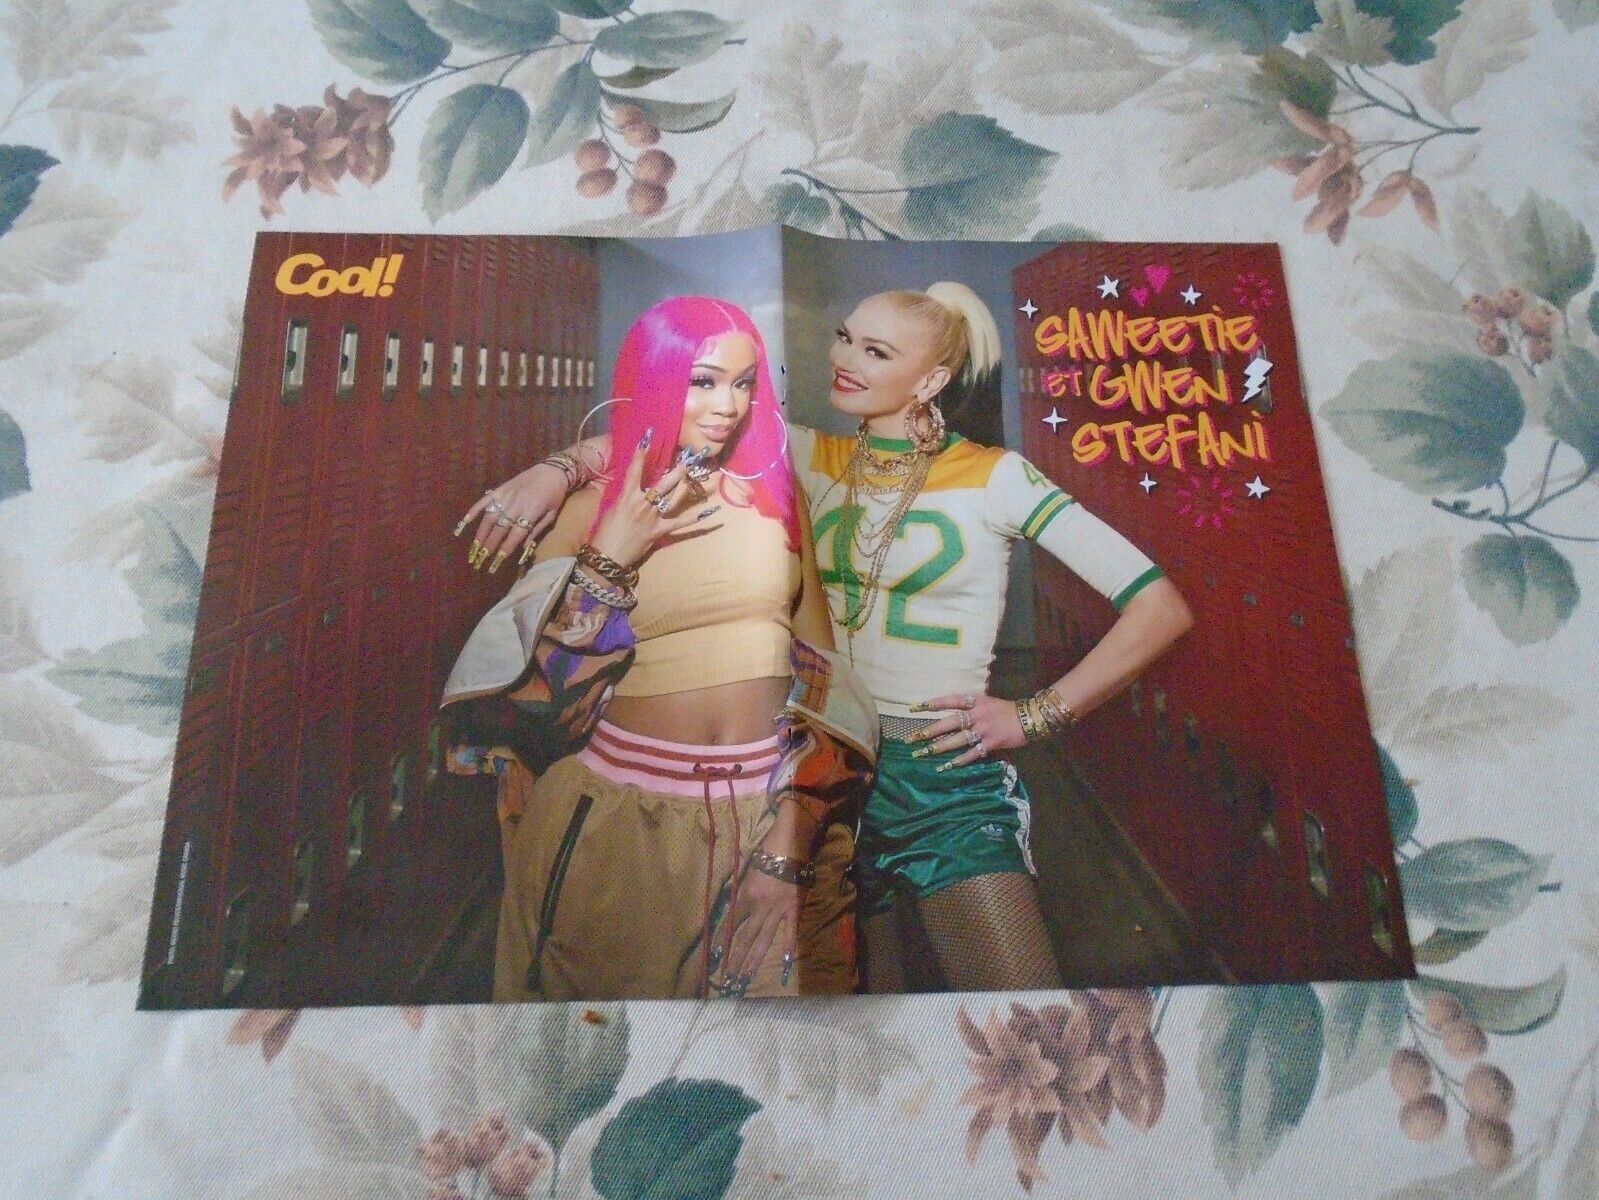 Gwen  Stefani Saweetie Or Dominique Fils-aime Poster  Color  15  By 11